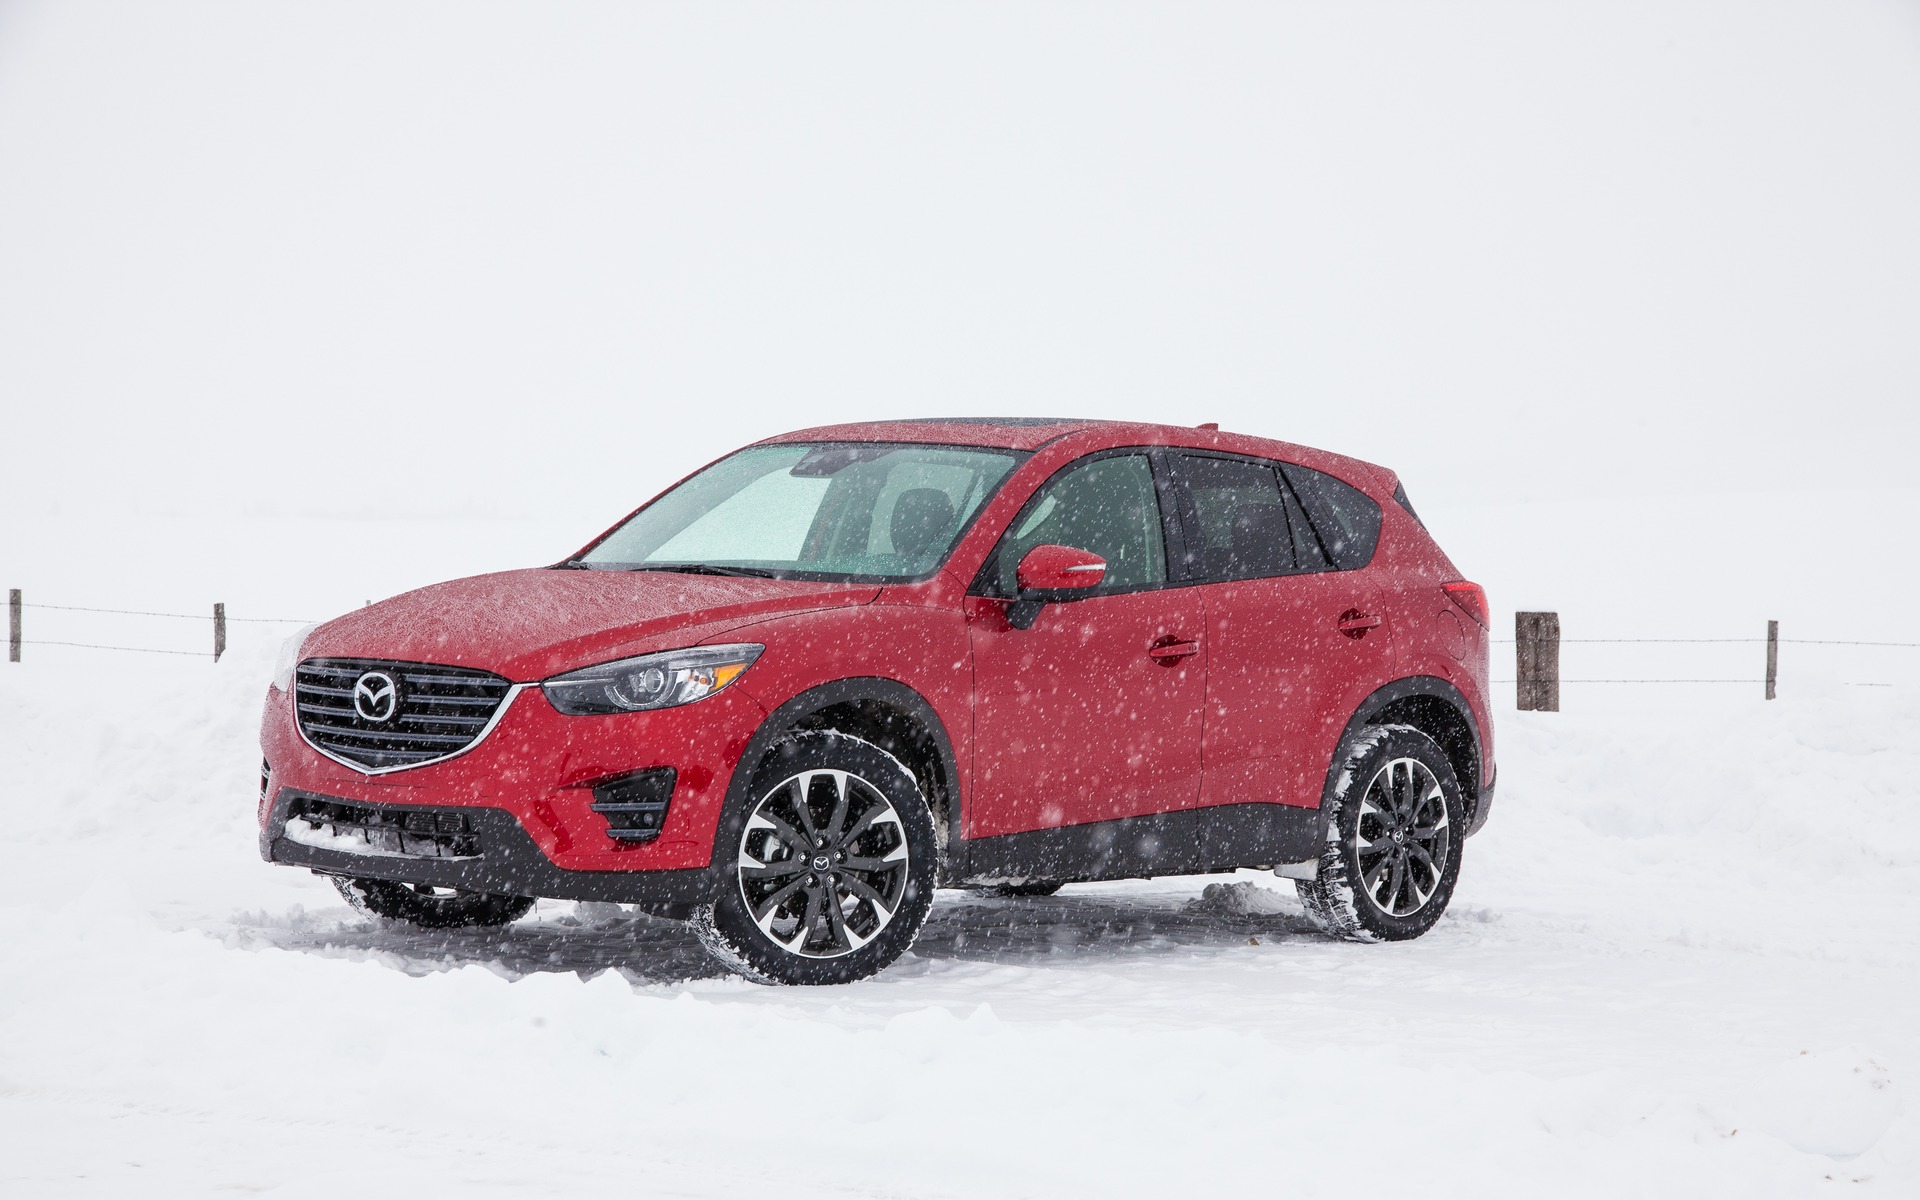 i-ACTIV, Mazda's intelligent all-wheel-drive system